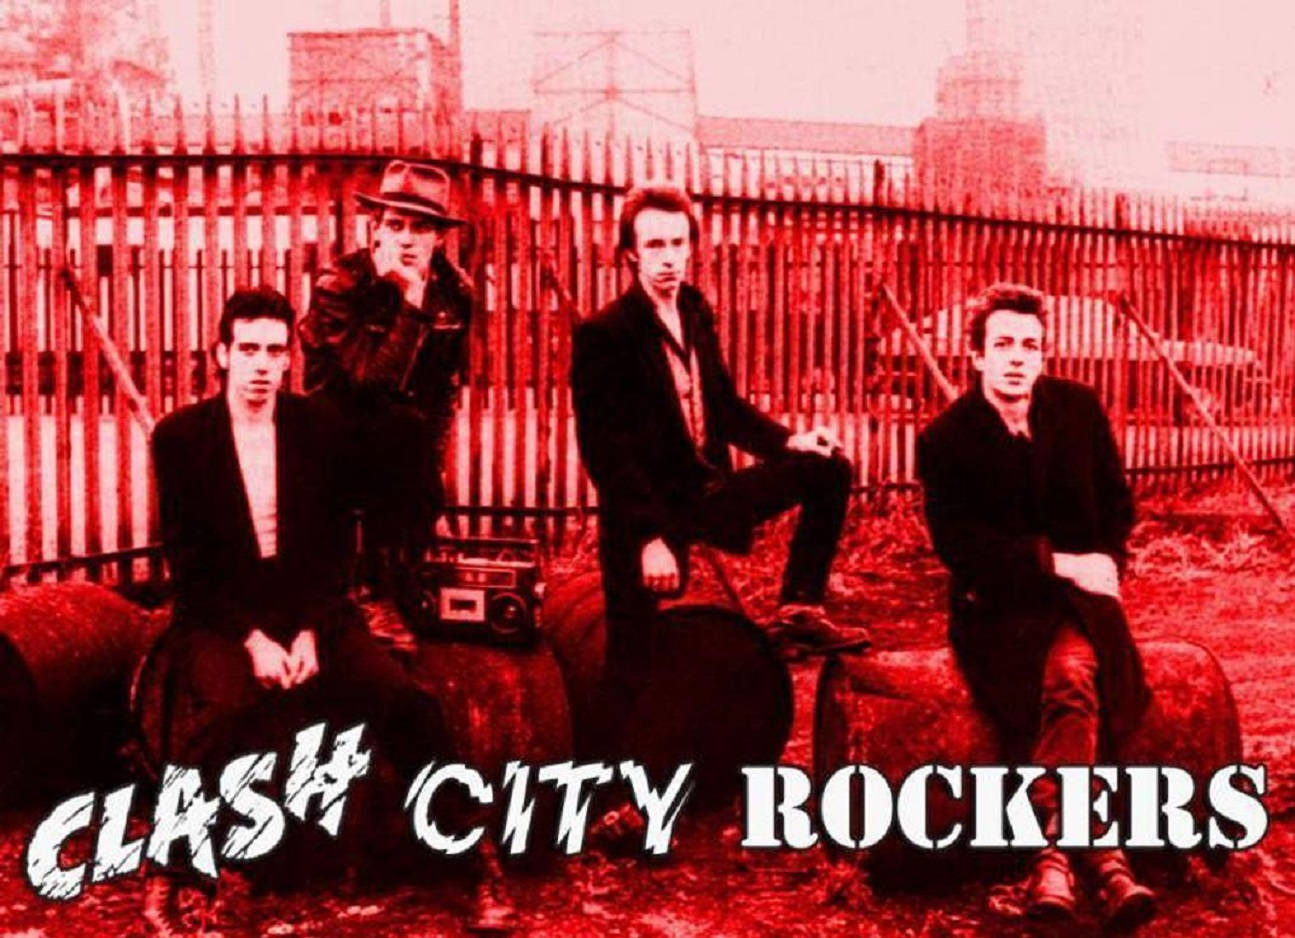 The Clash City Rockers Album Cover Wallpaper